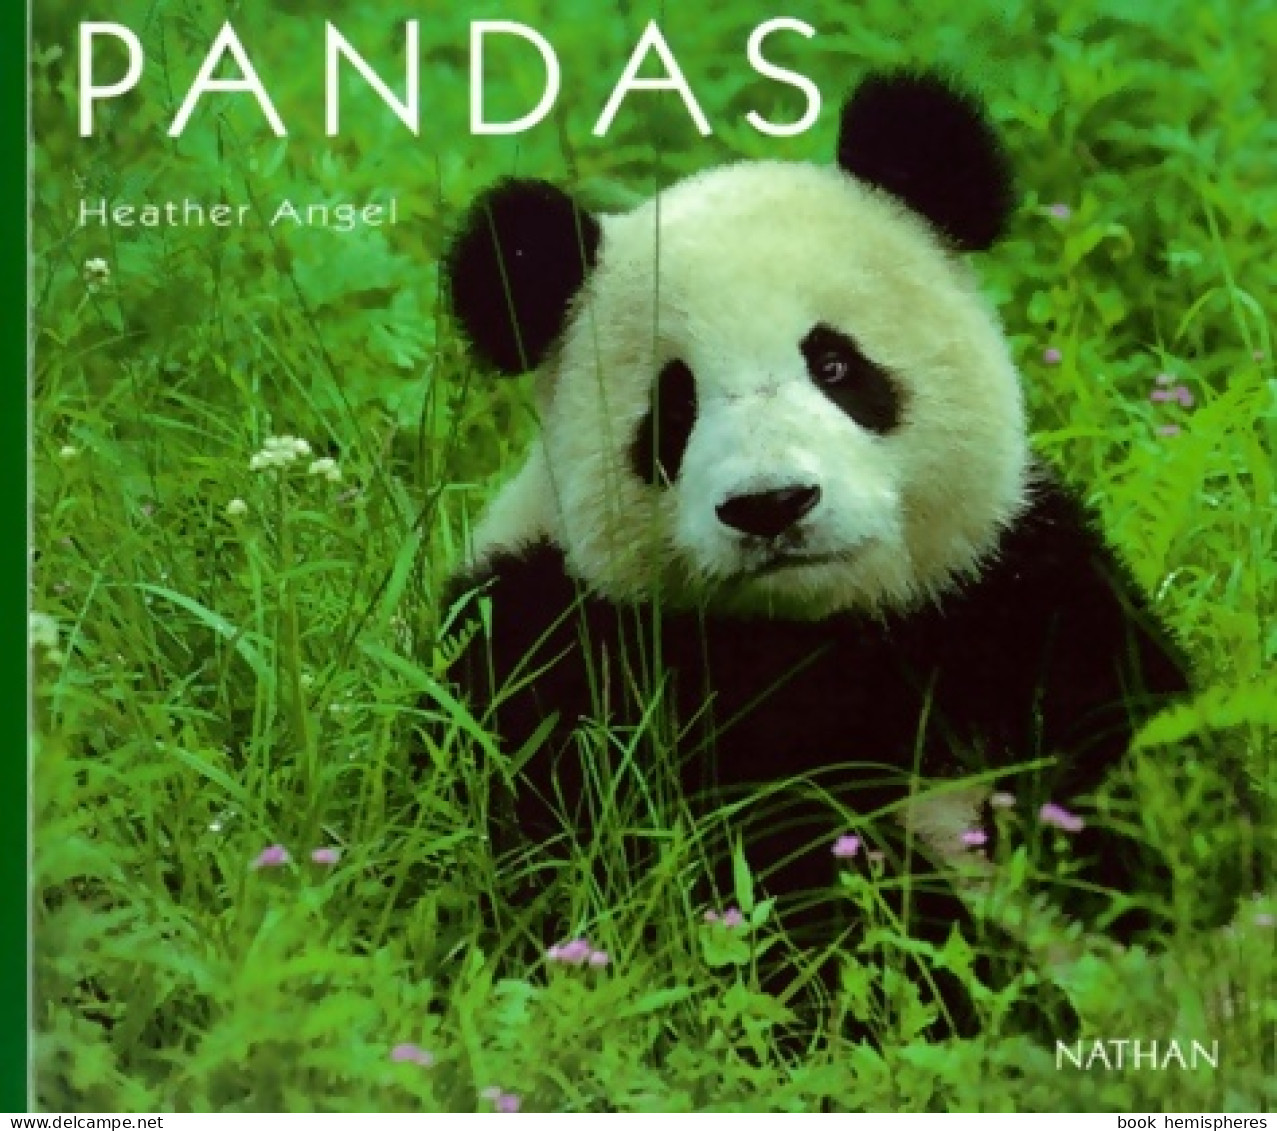 Pandas (1999) De Heather Angel - Tiere